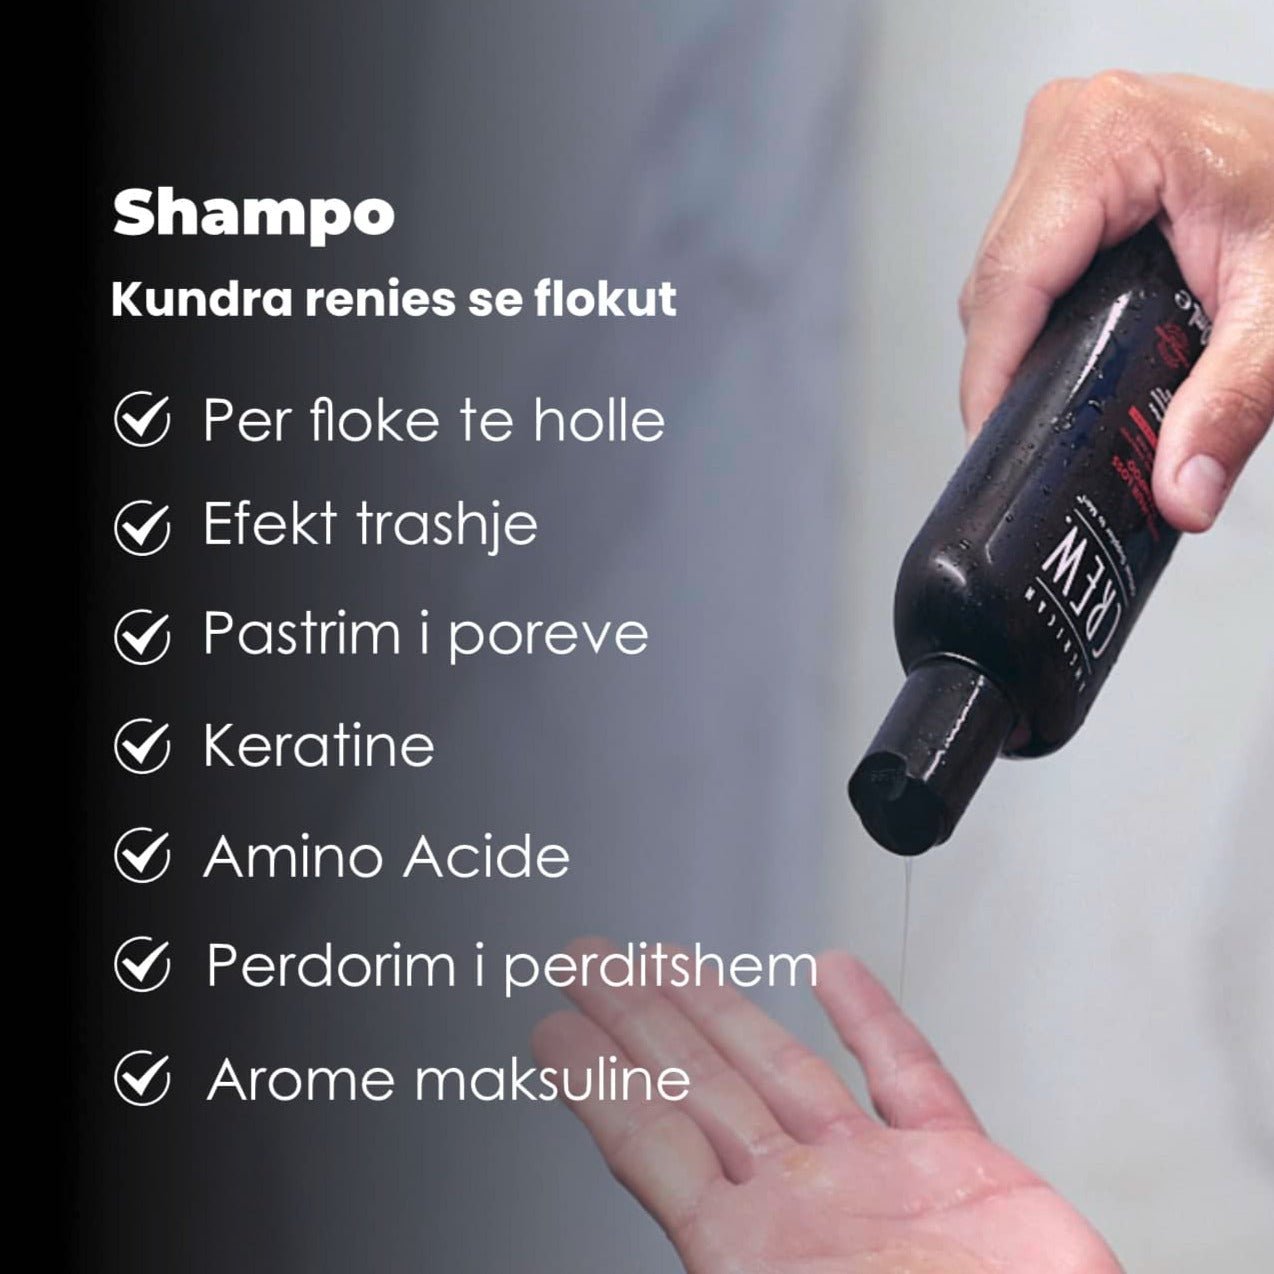 American Crew Anti Hairloss Shampoo - Sagema